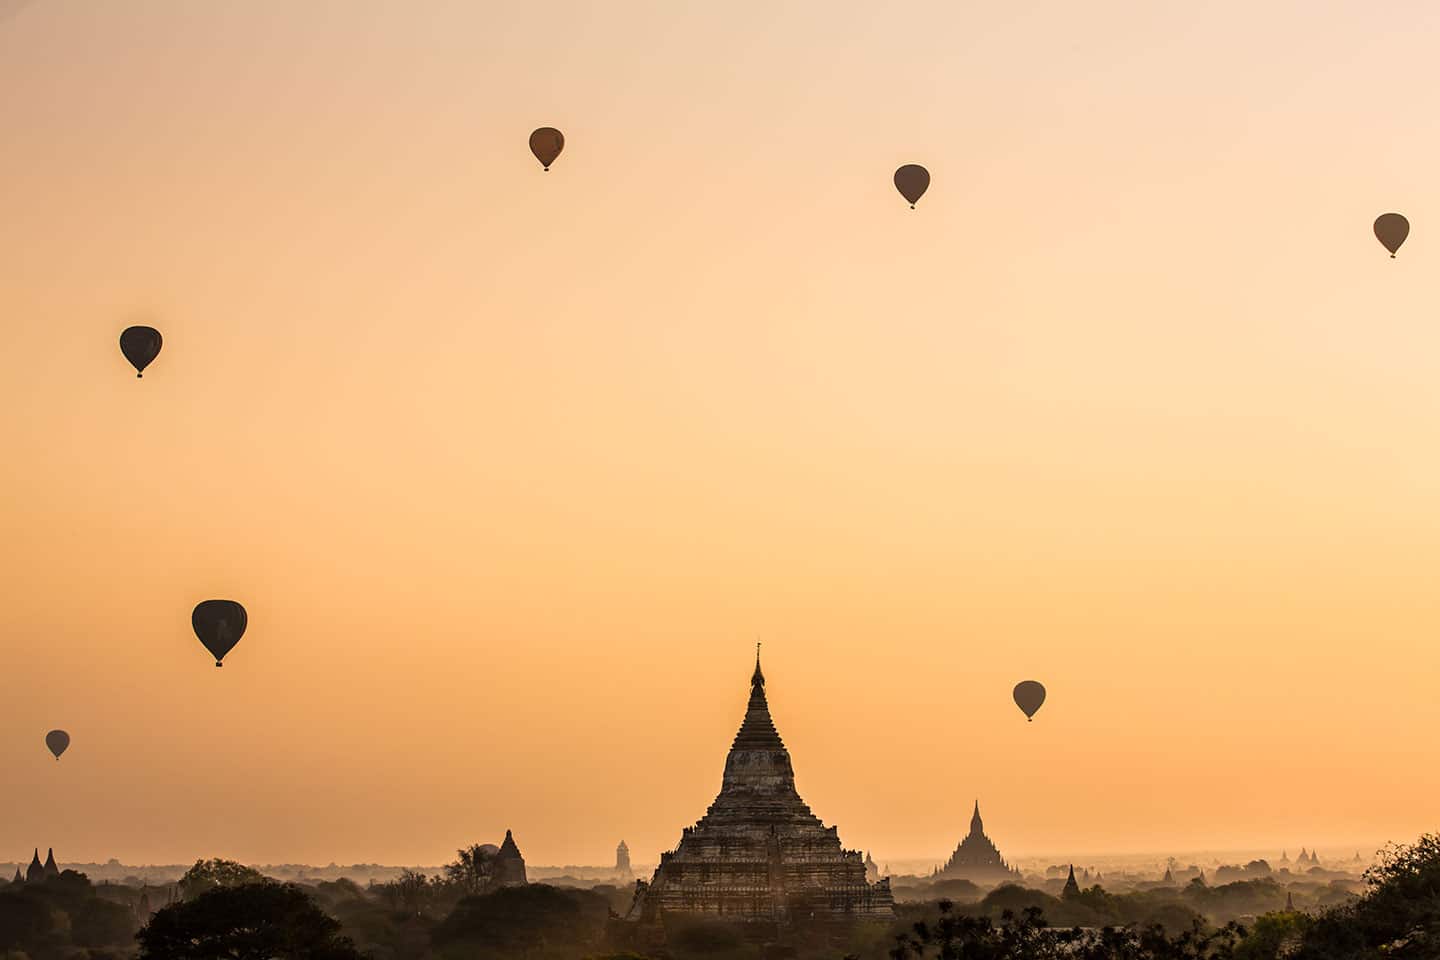 Hot air balloons over Bagan temples in Myanmar